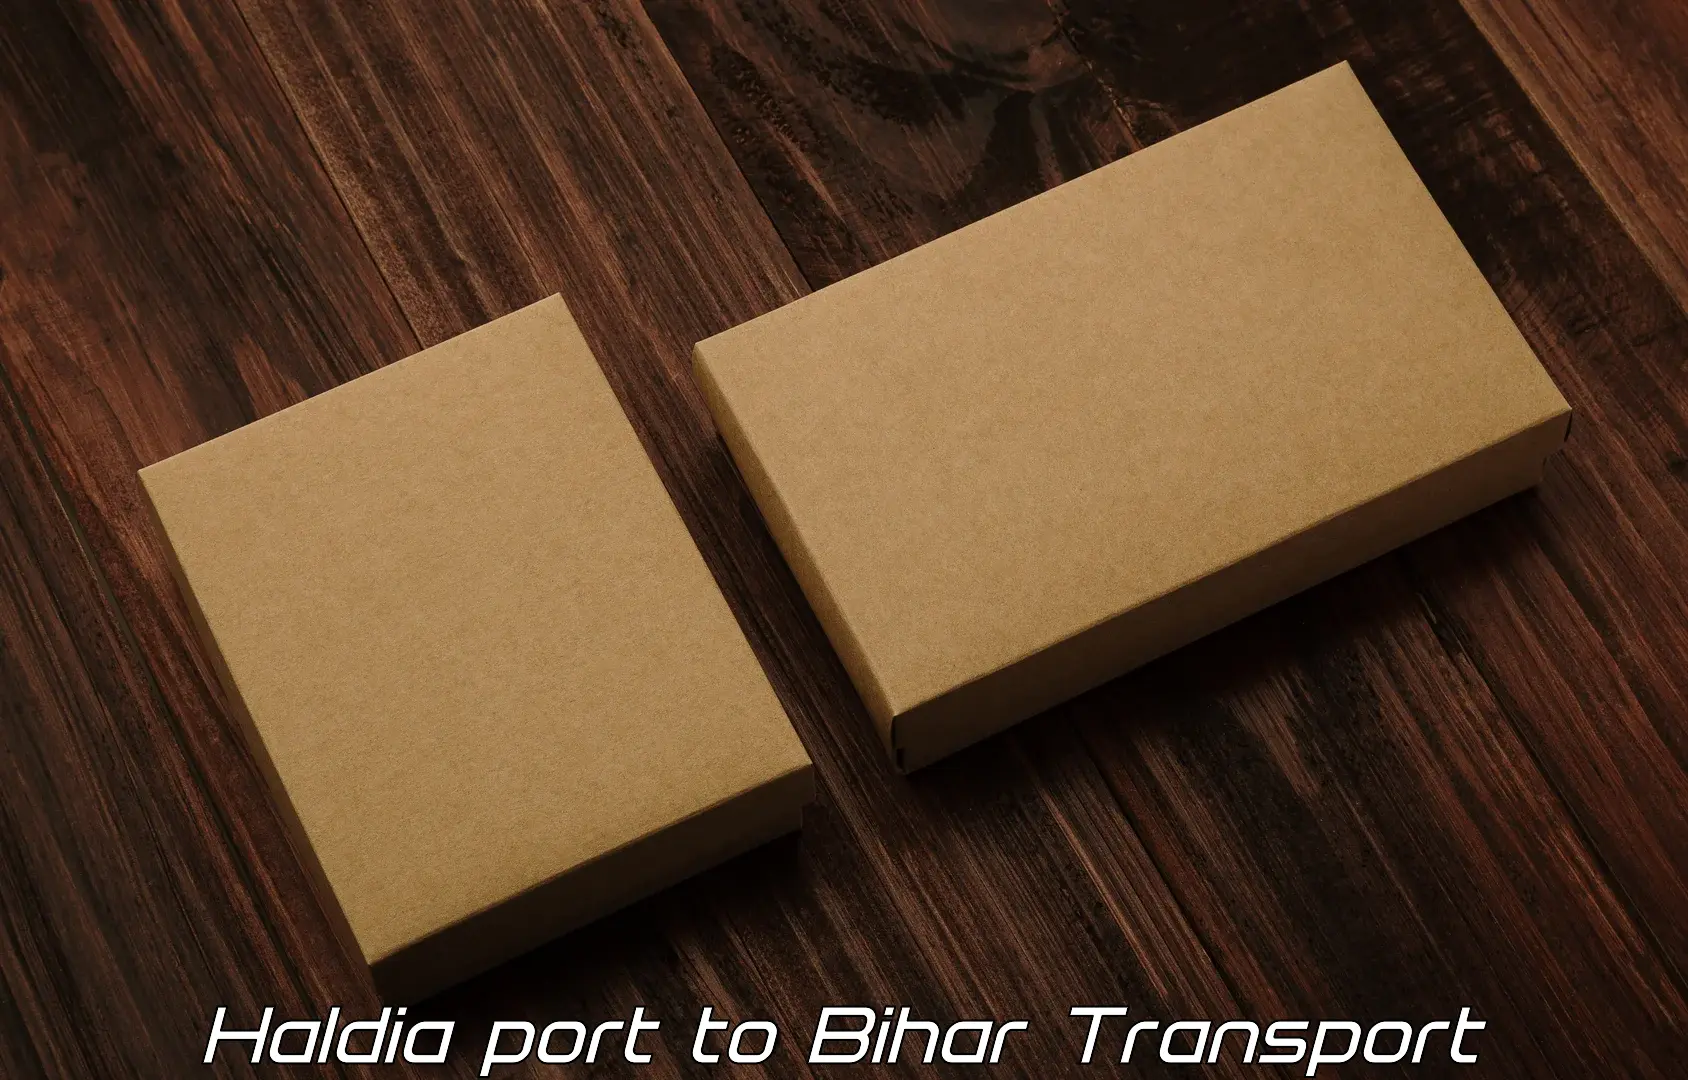 Commercial transport service Haldia port to Bihar